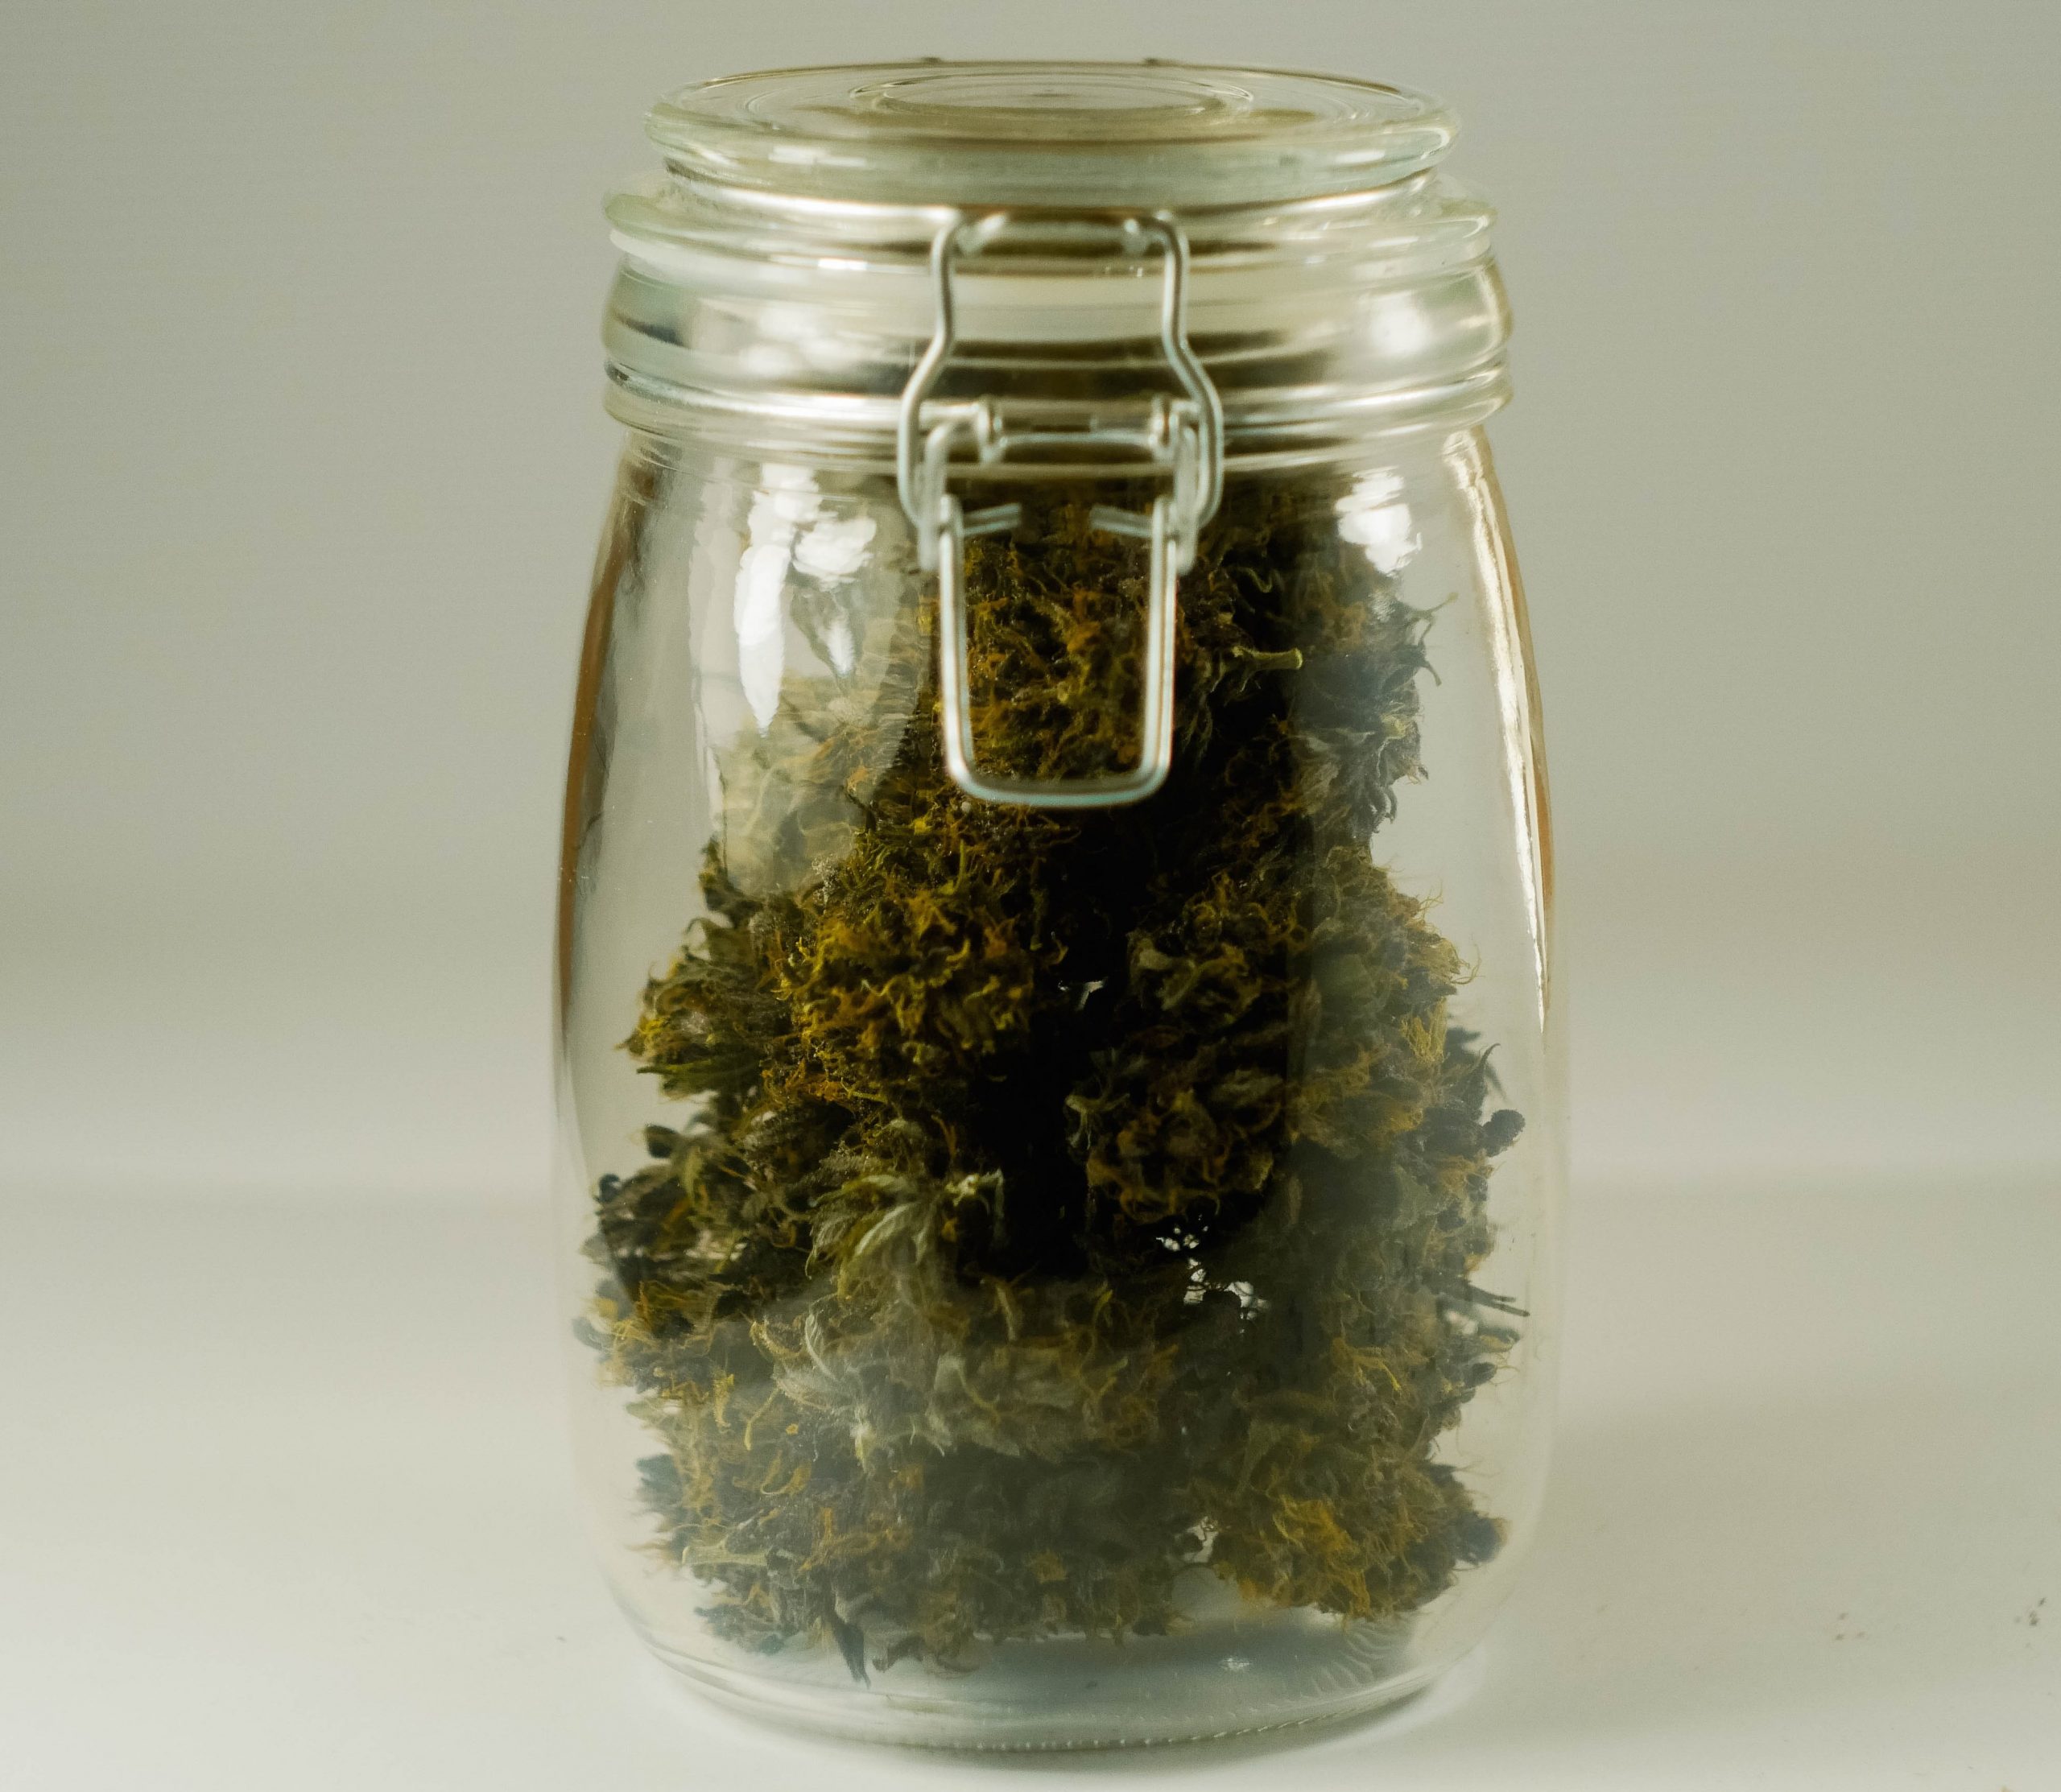 marijuana buds stored in an airtight glass jar